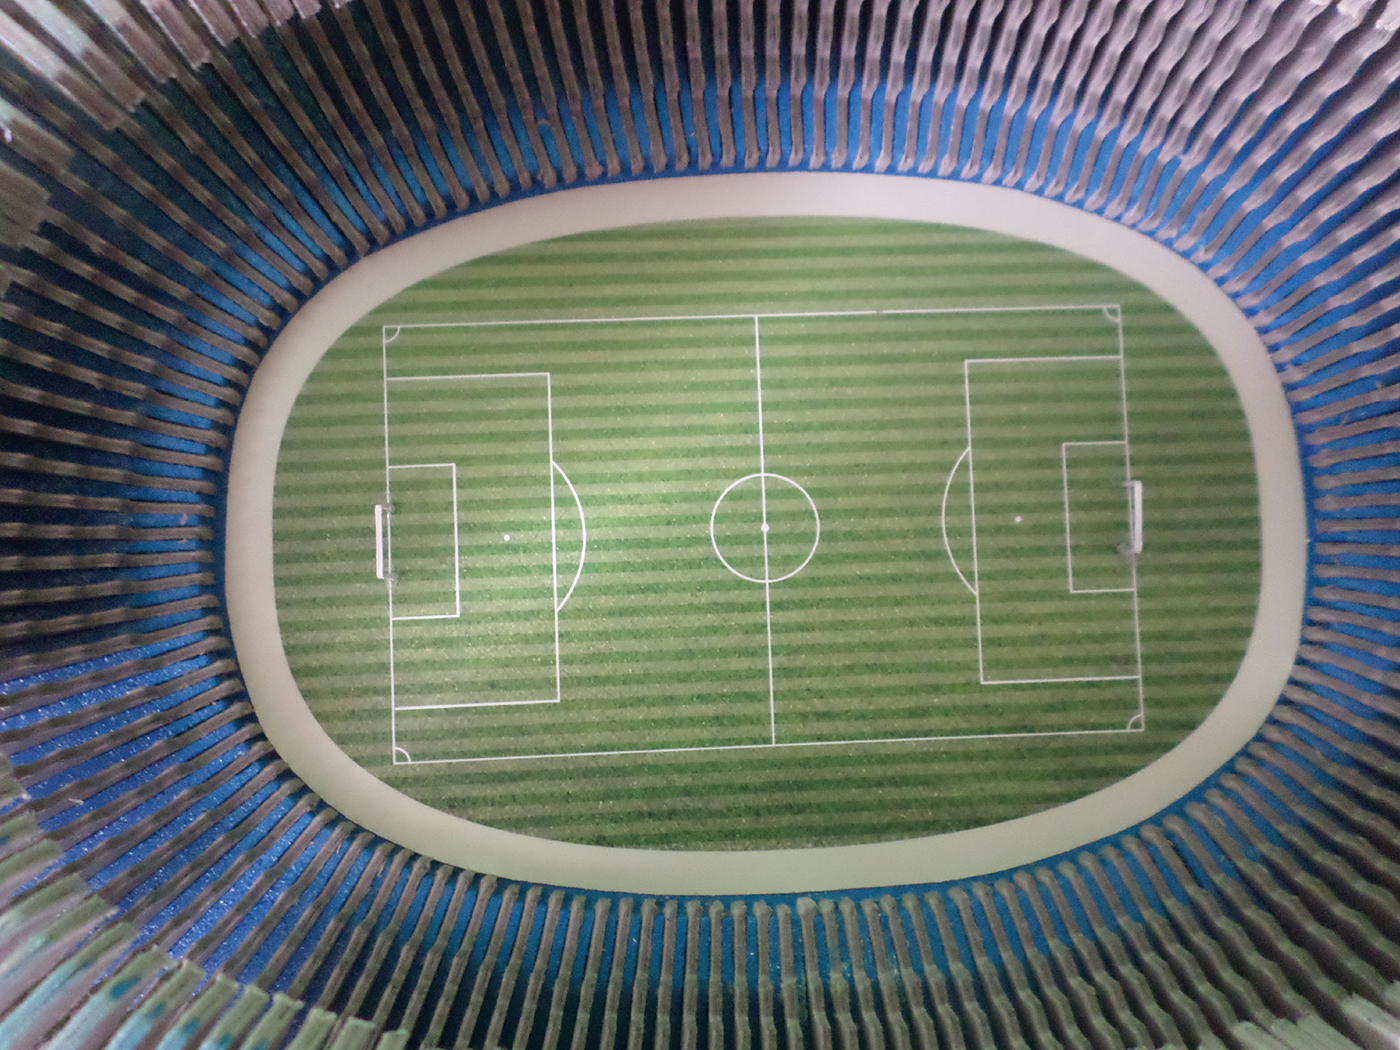 Plano seriado estadio Allianz Arena structural design feisargarcia marok brading design